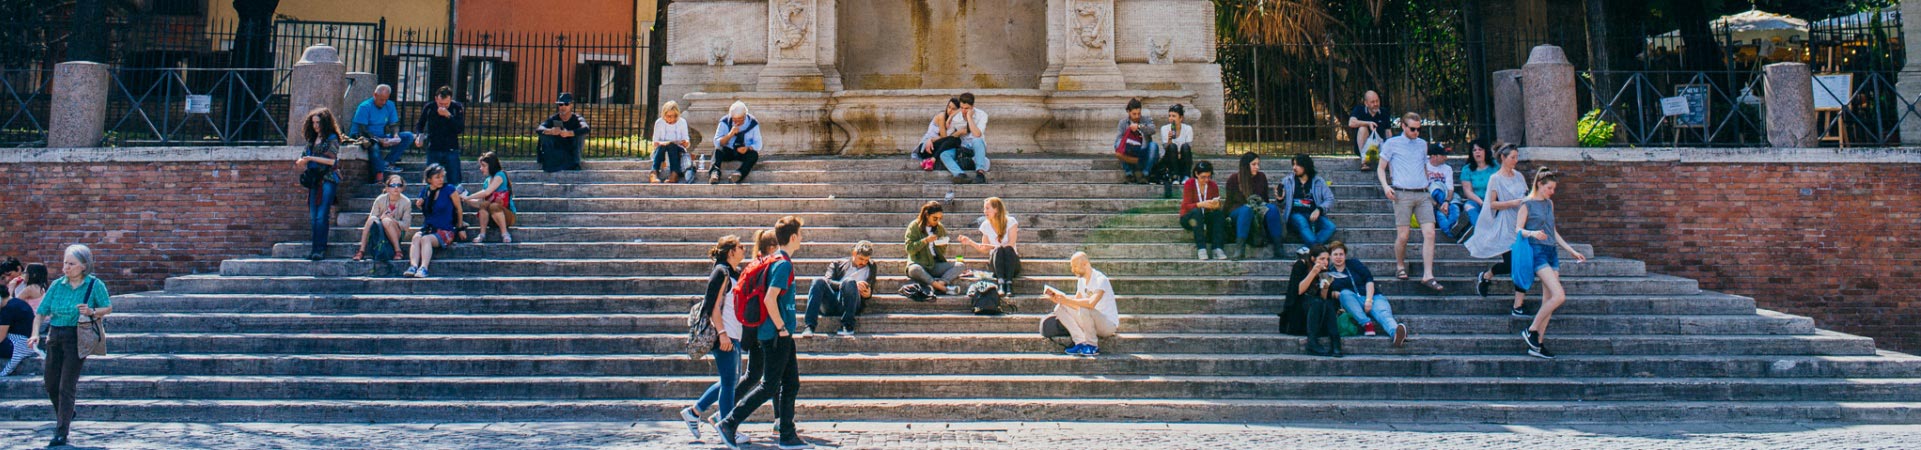 John Cabot University Community | Student Opportunities in Rome